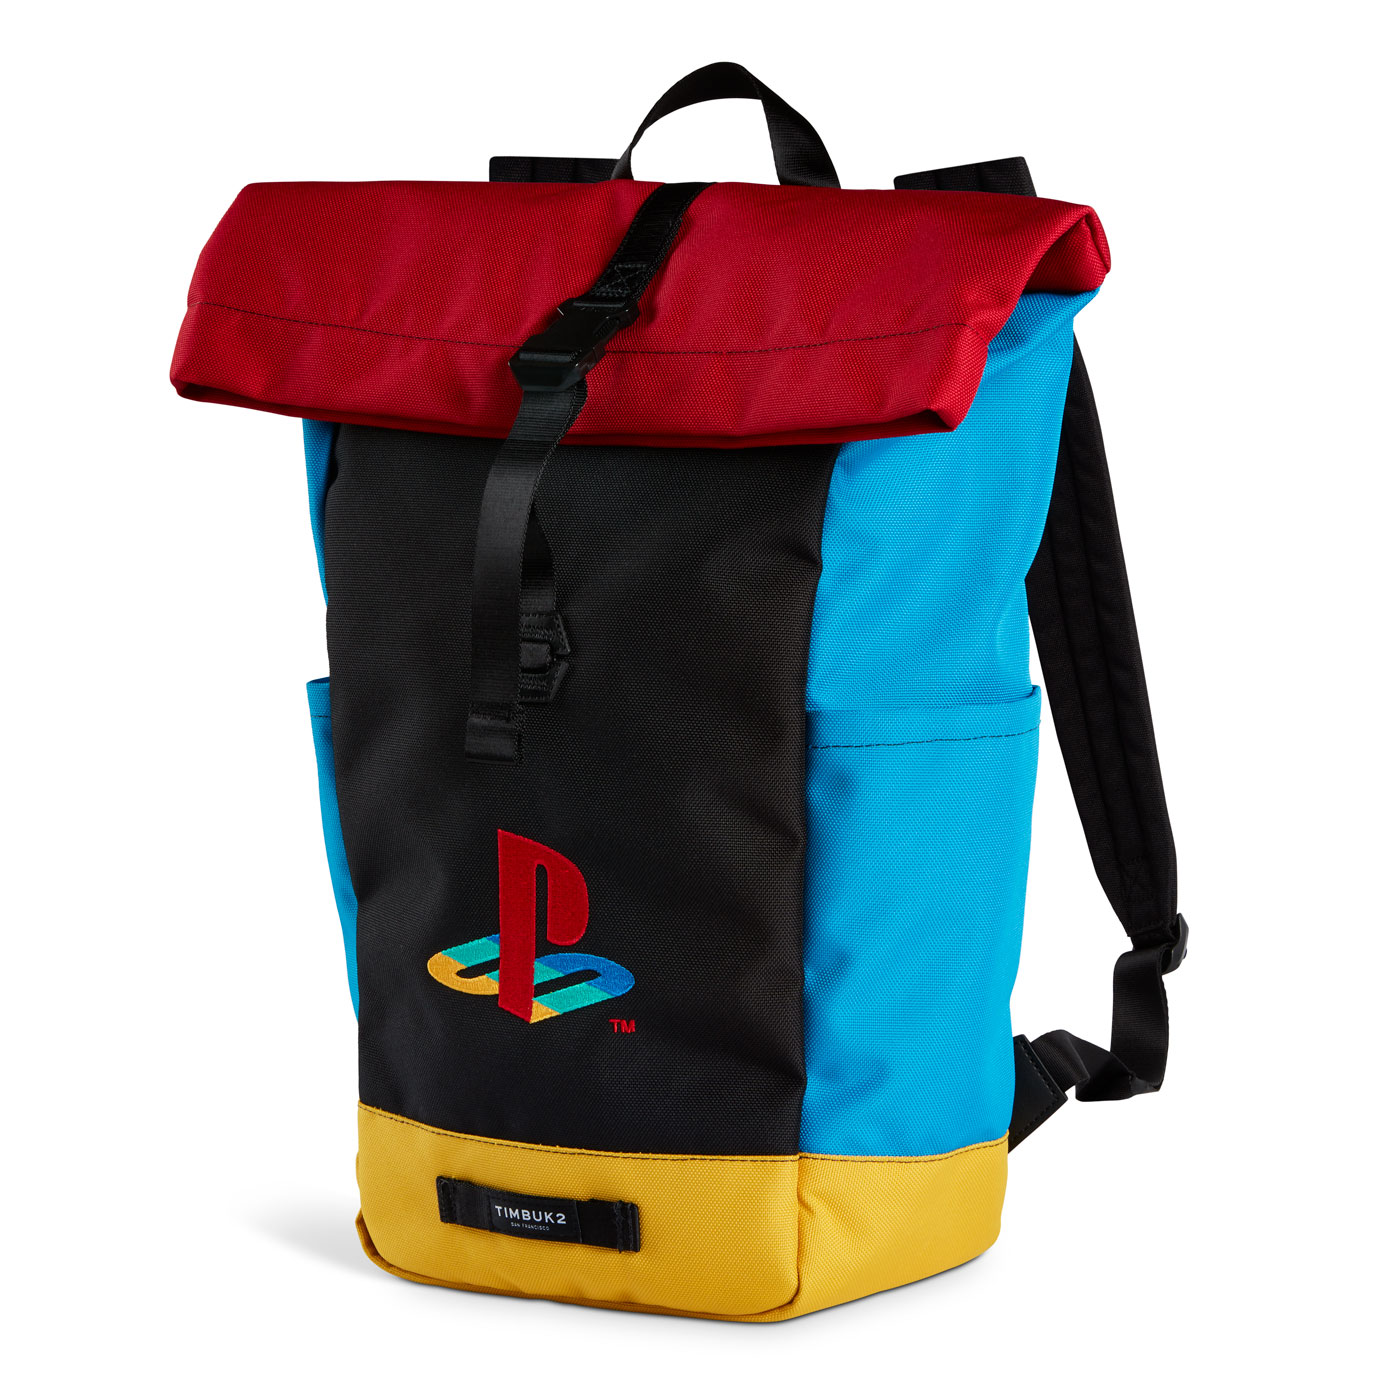 PlayStation Backpack Inspired by Original Logo | PlayStation Gear